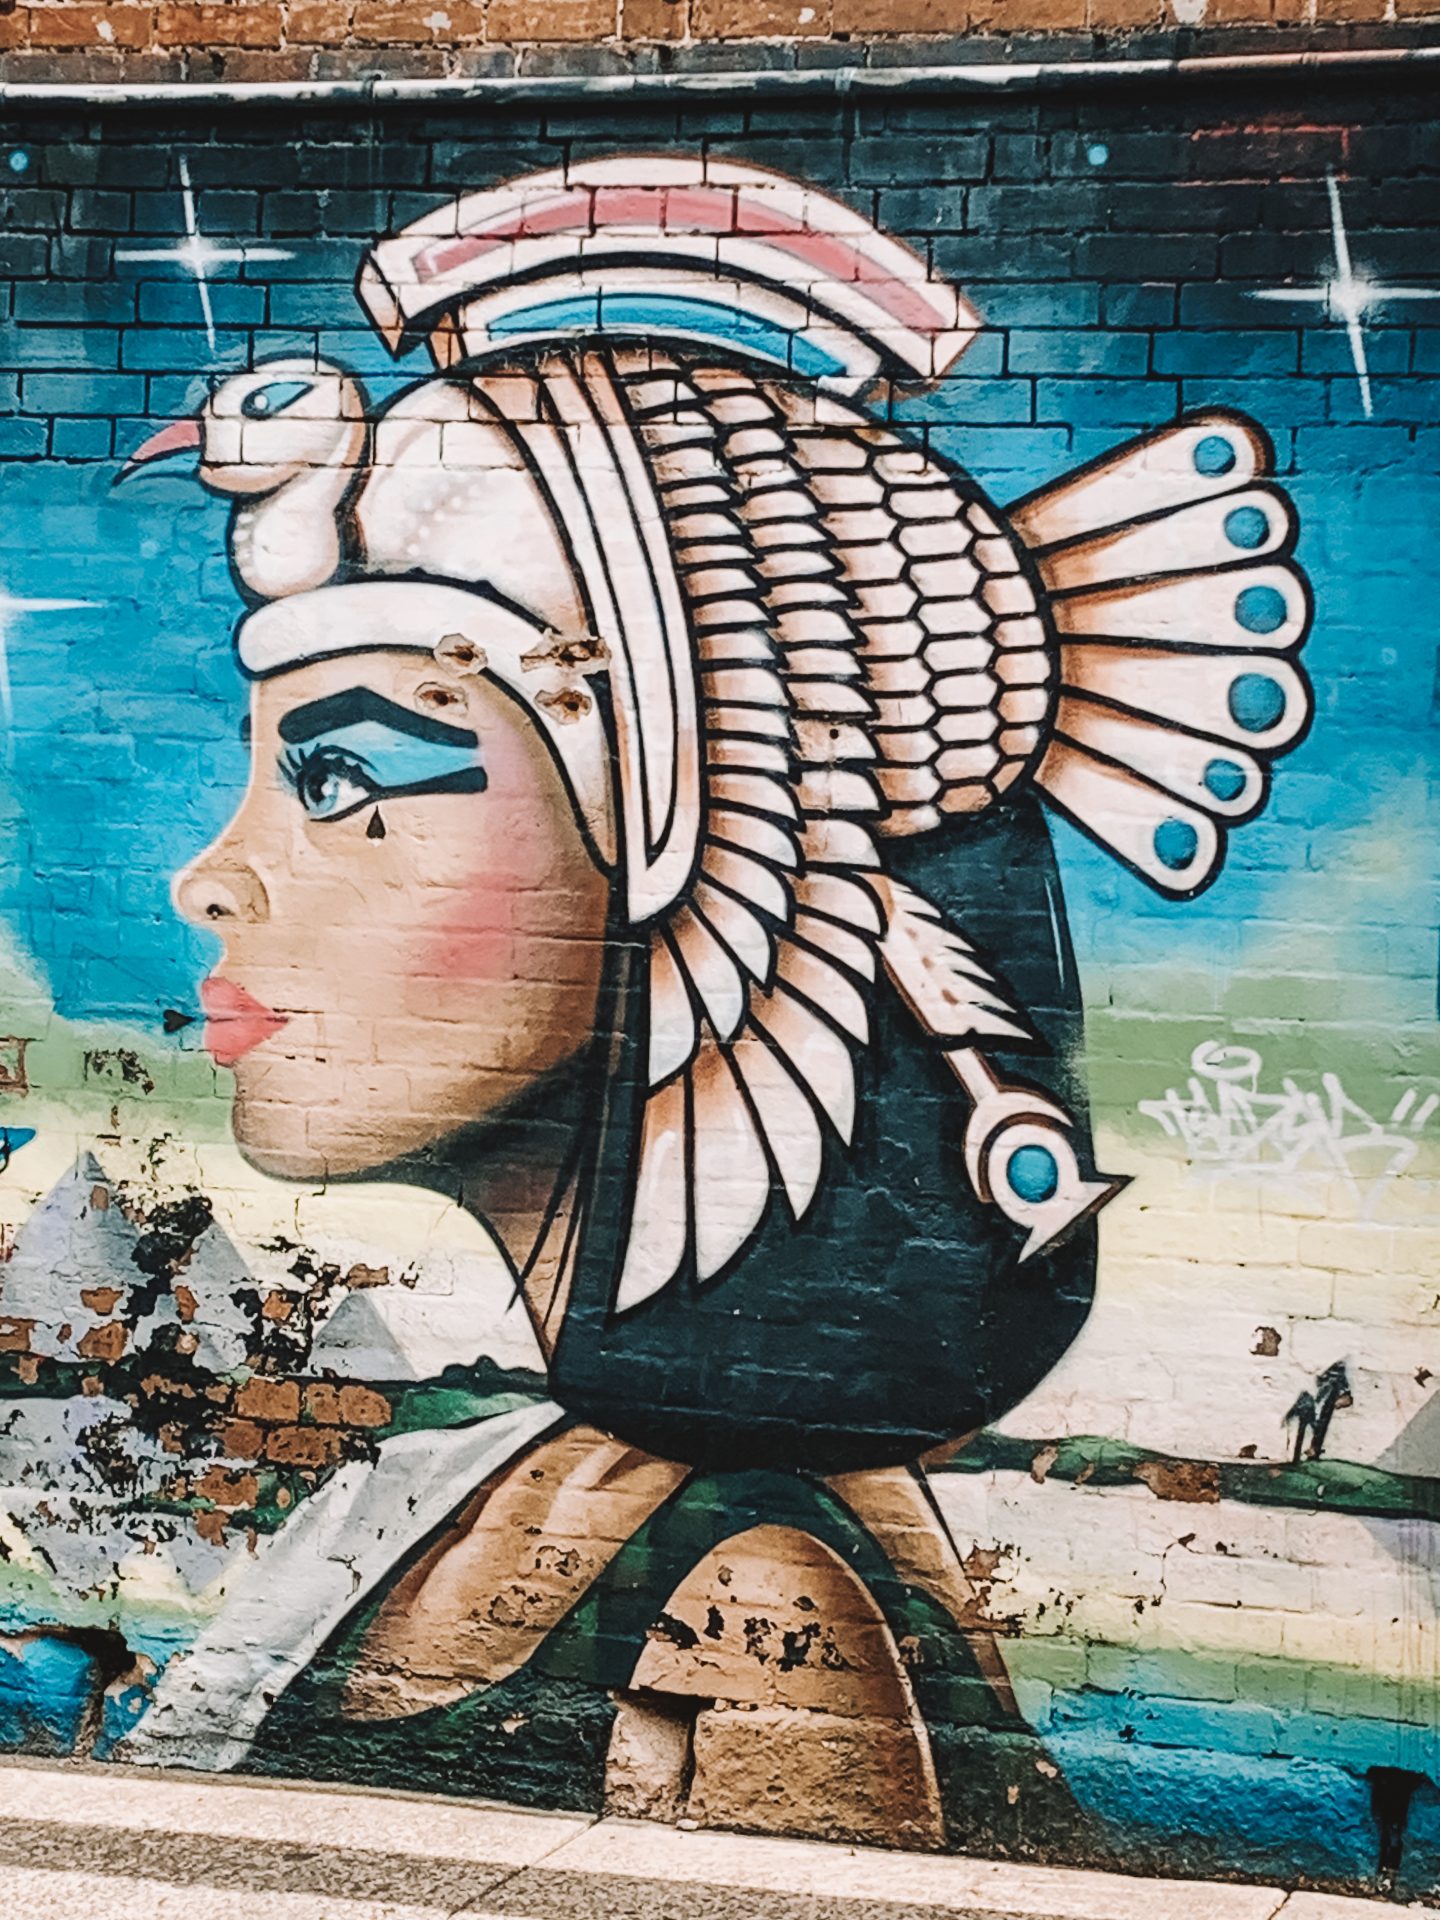 graffiti-in-newtown-sydney-1440x1920.jpg